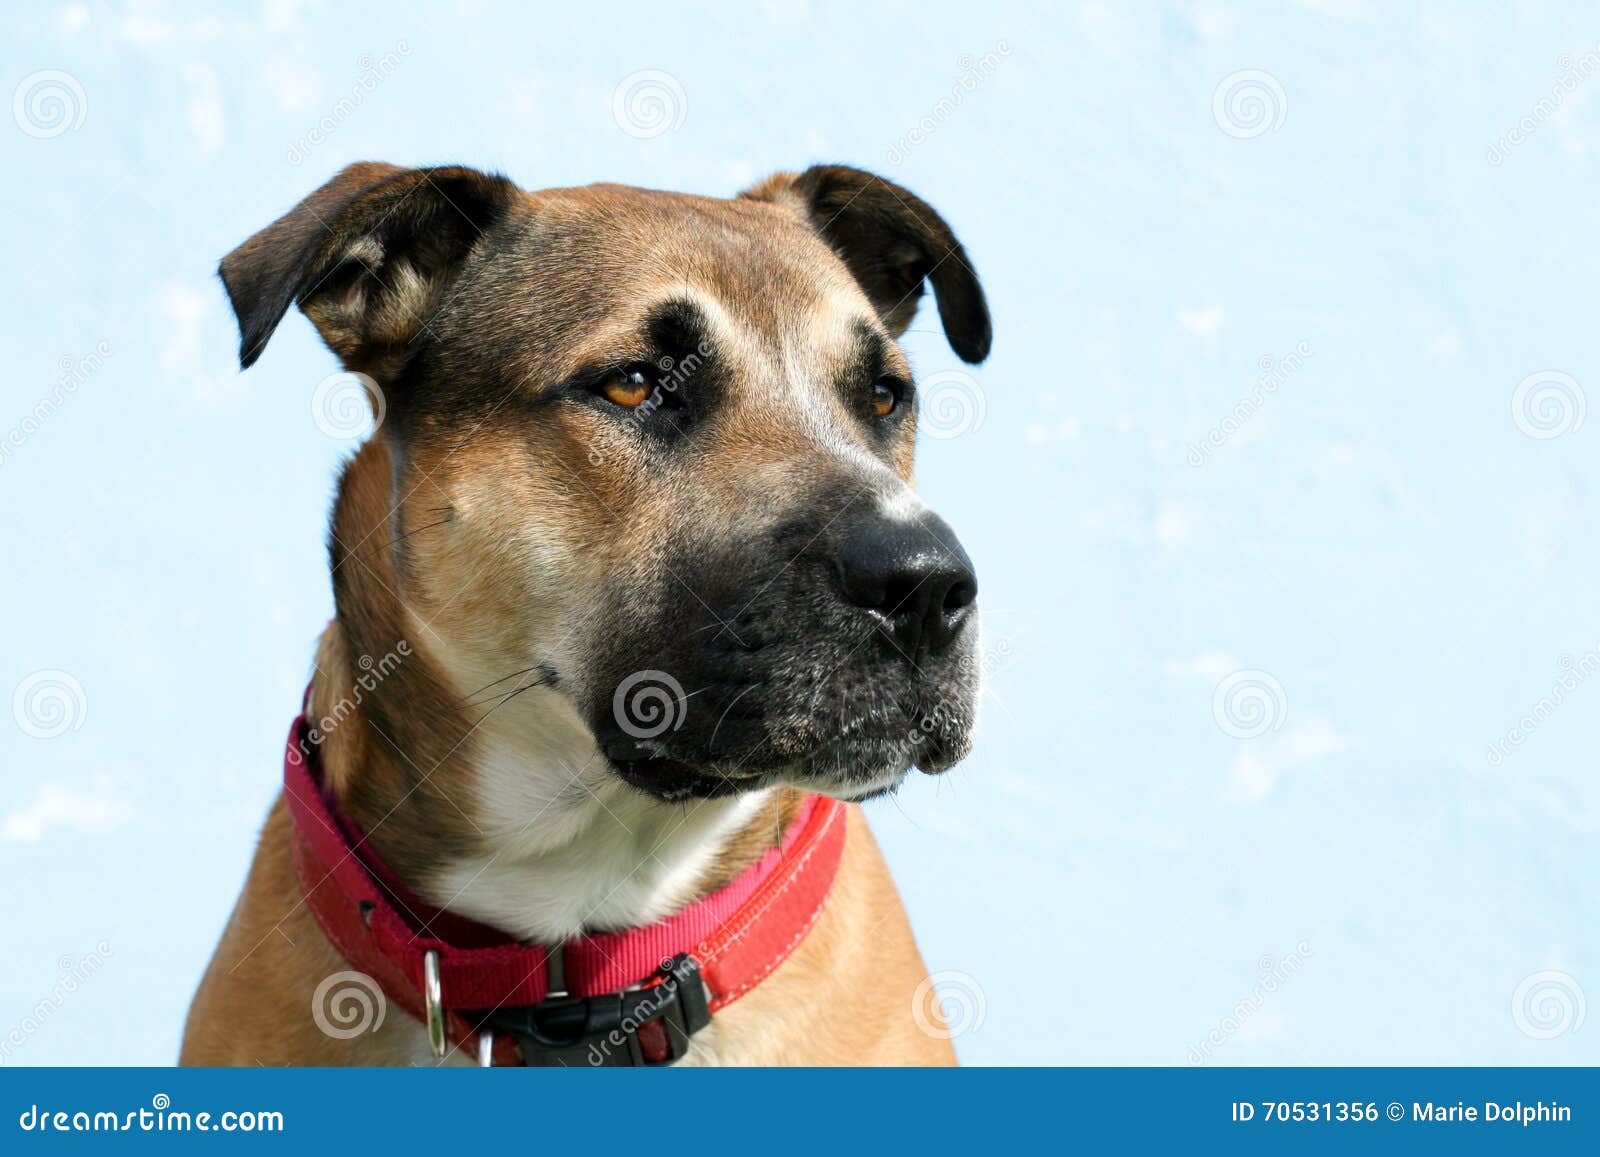 headshot of large mixed breed dog looks right